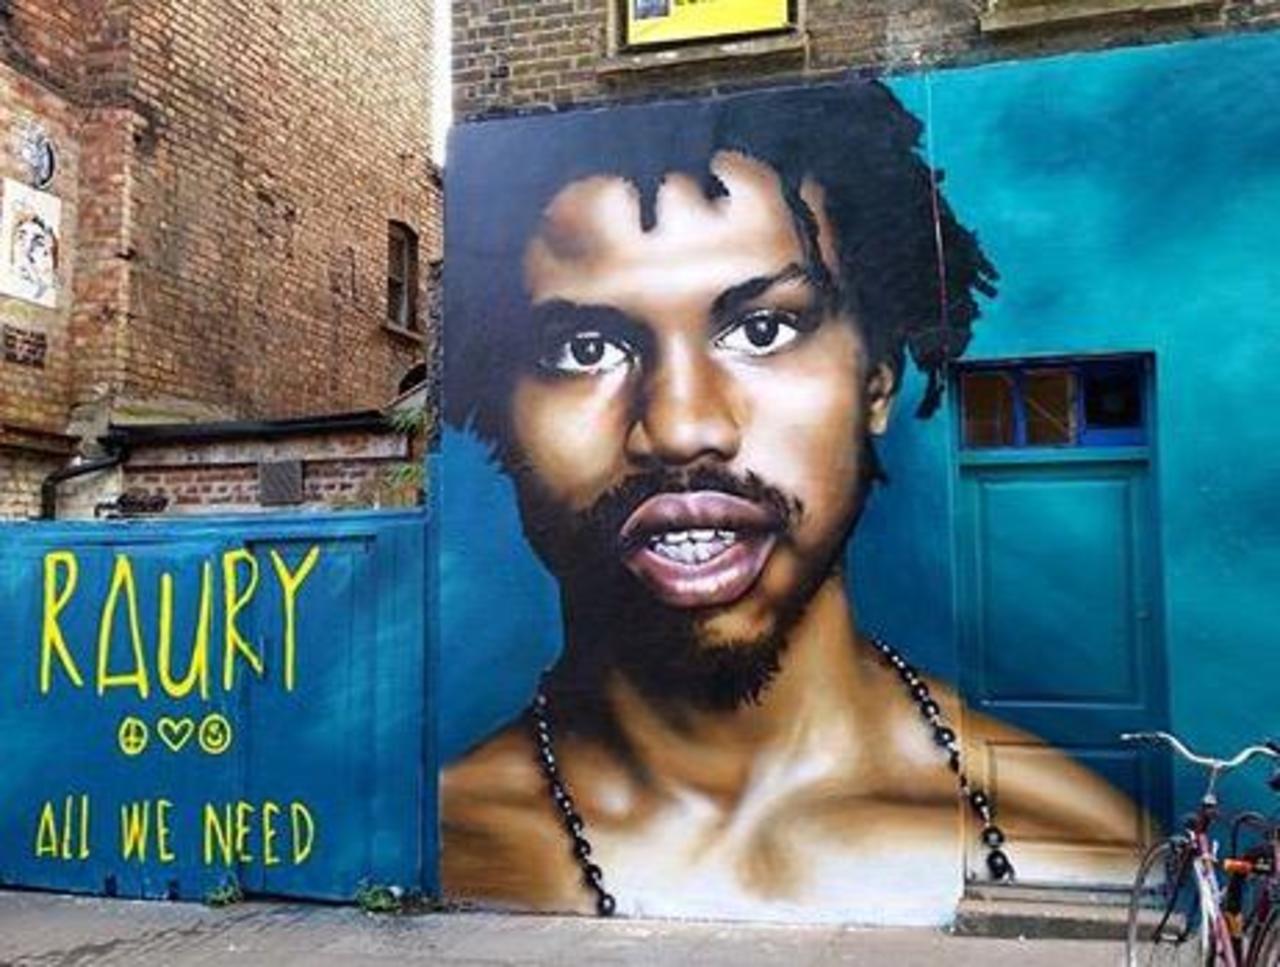 New Street Art of Raury by Olliver Switch in Brick Lane 

#art #graffiti #mural #streetart http://t.co/TQya62b9rG